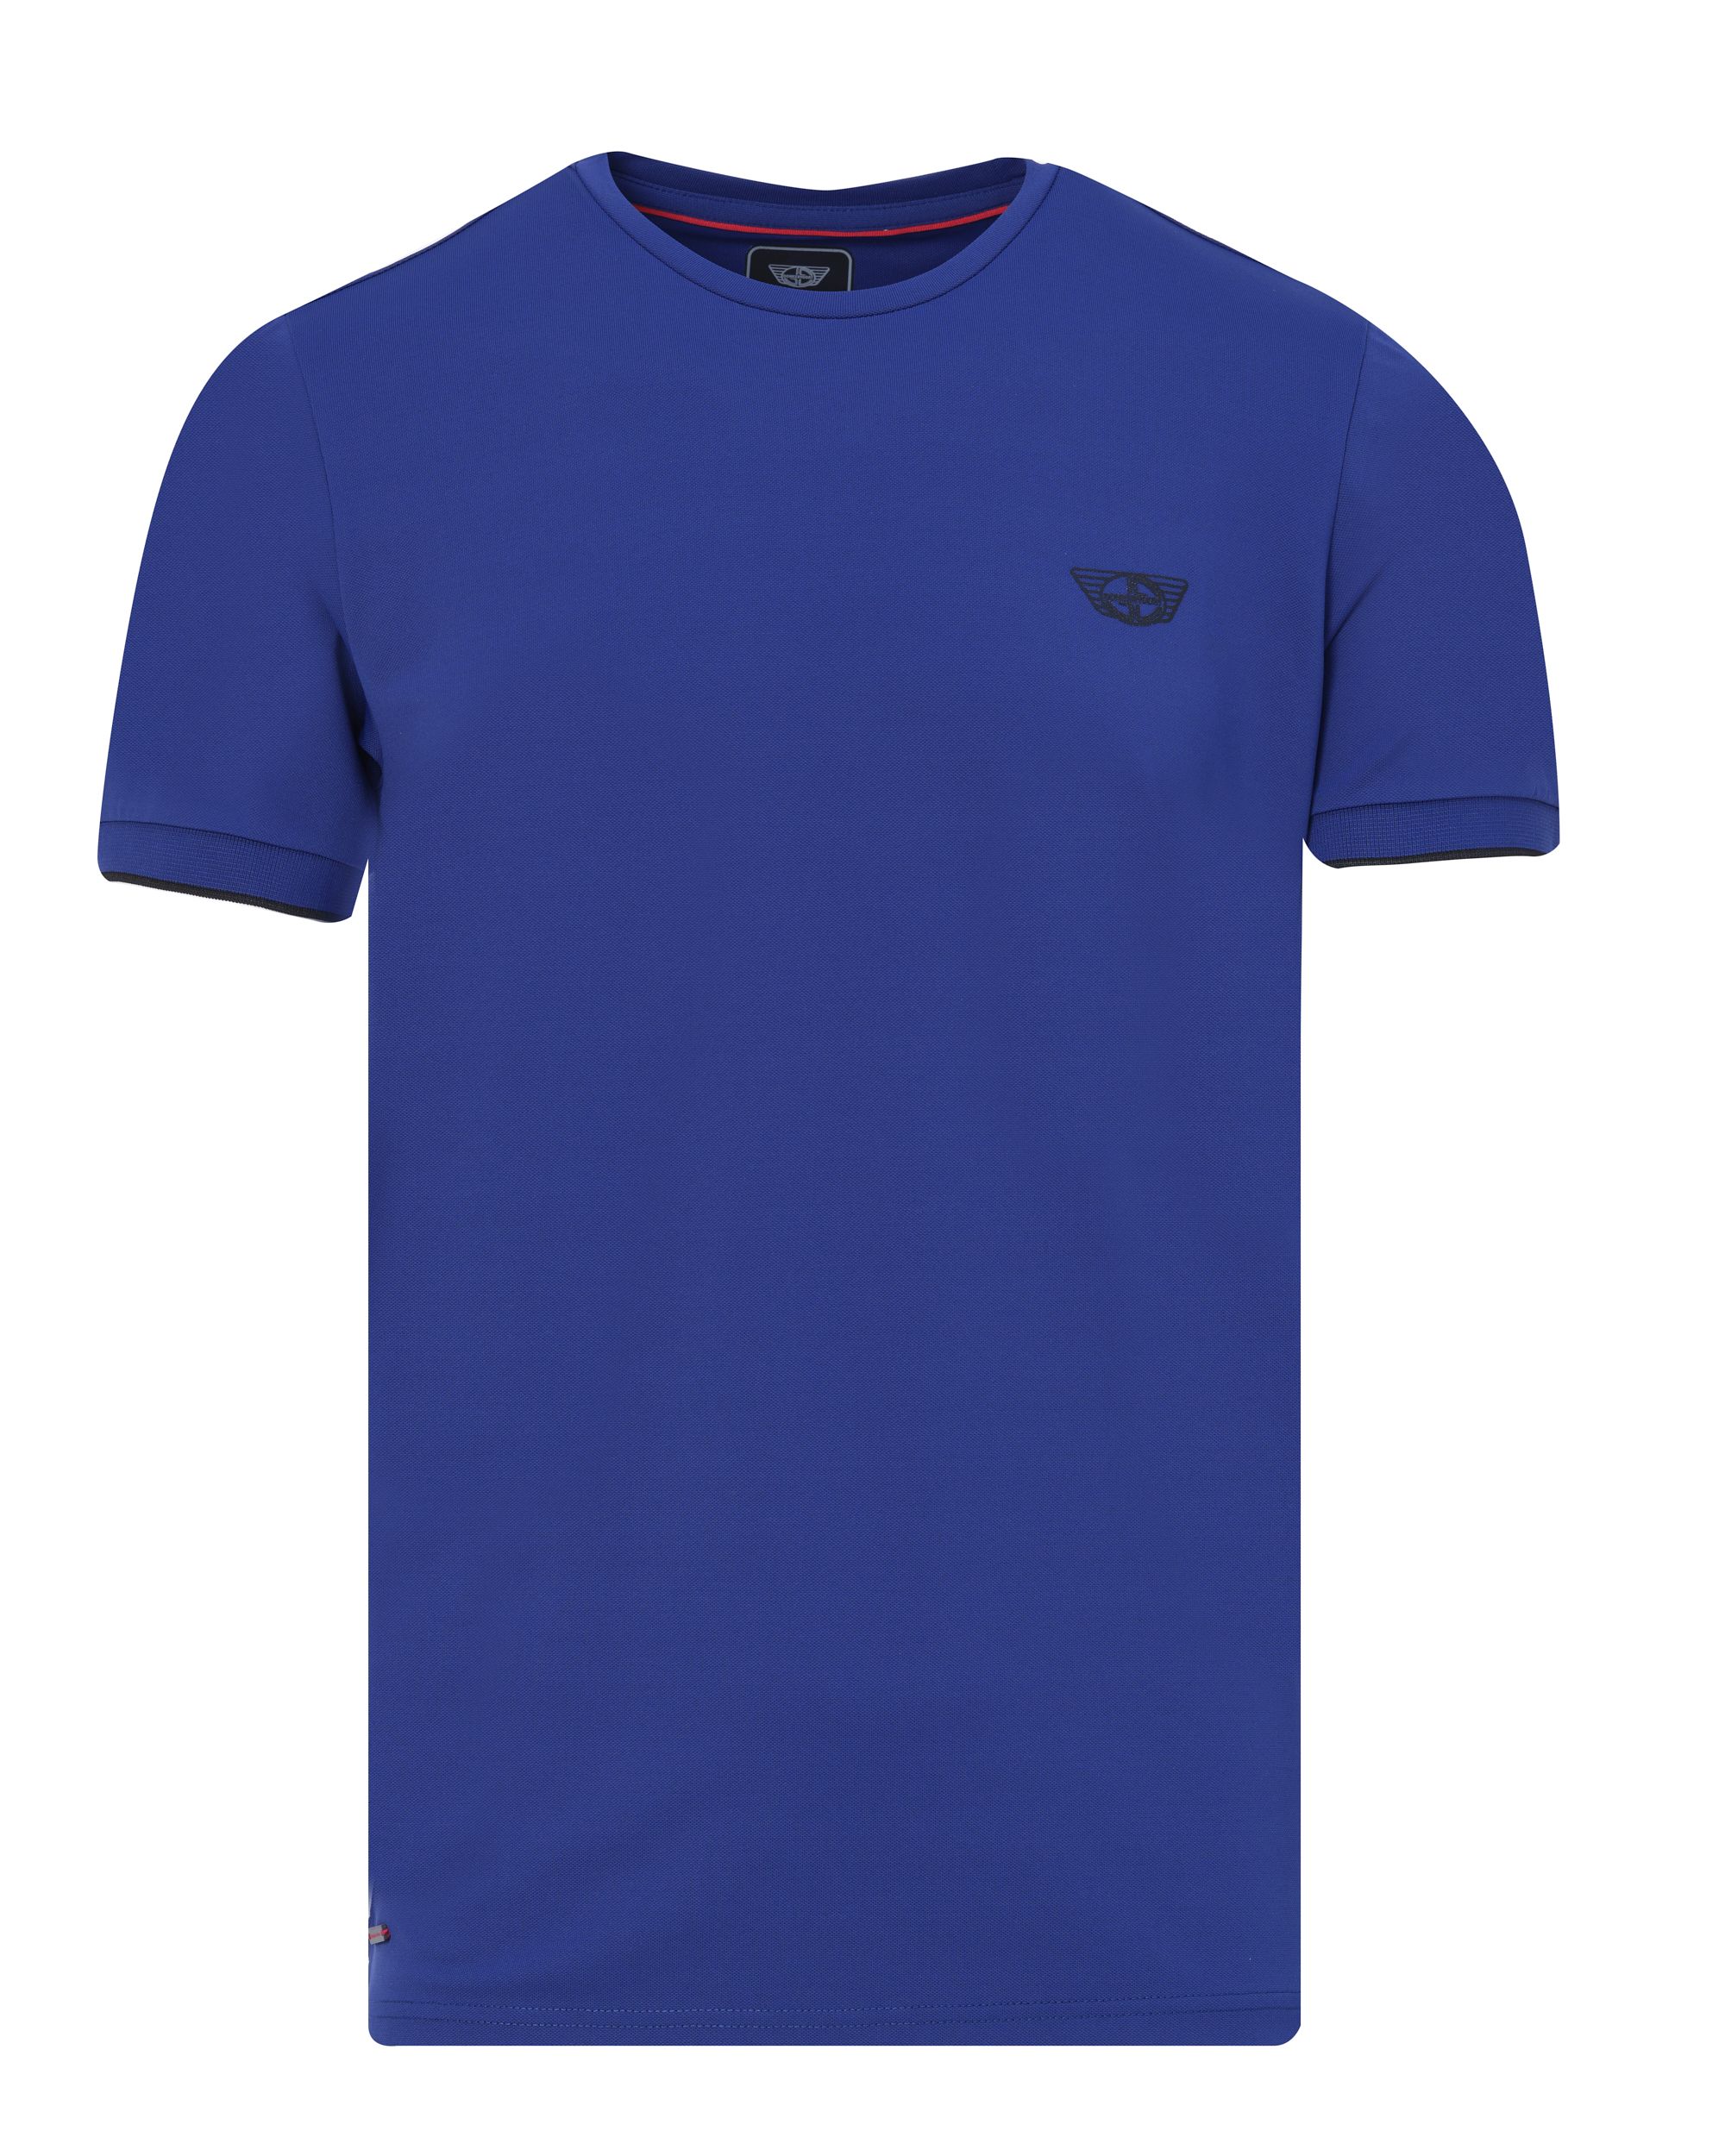 Donkervoort T-shirt KM Beacon Blue 077575-004-L